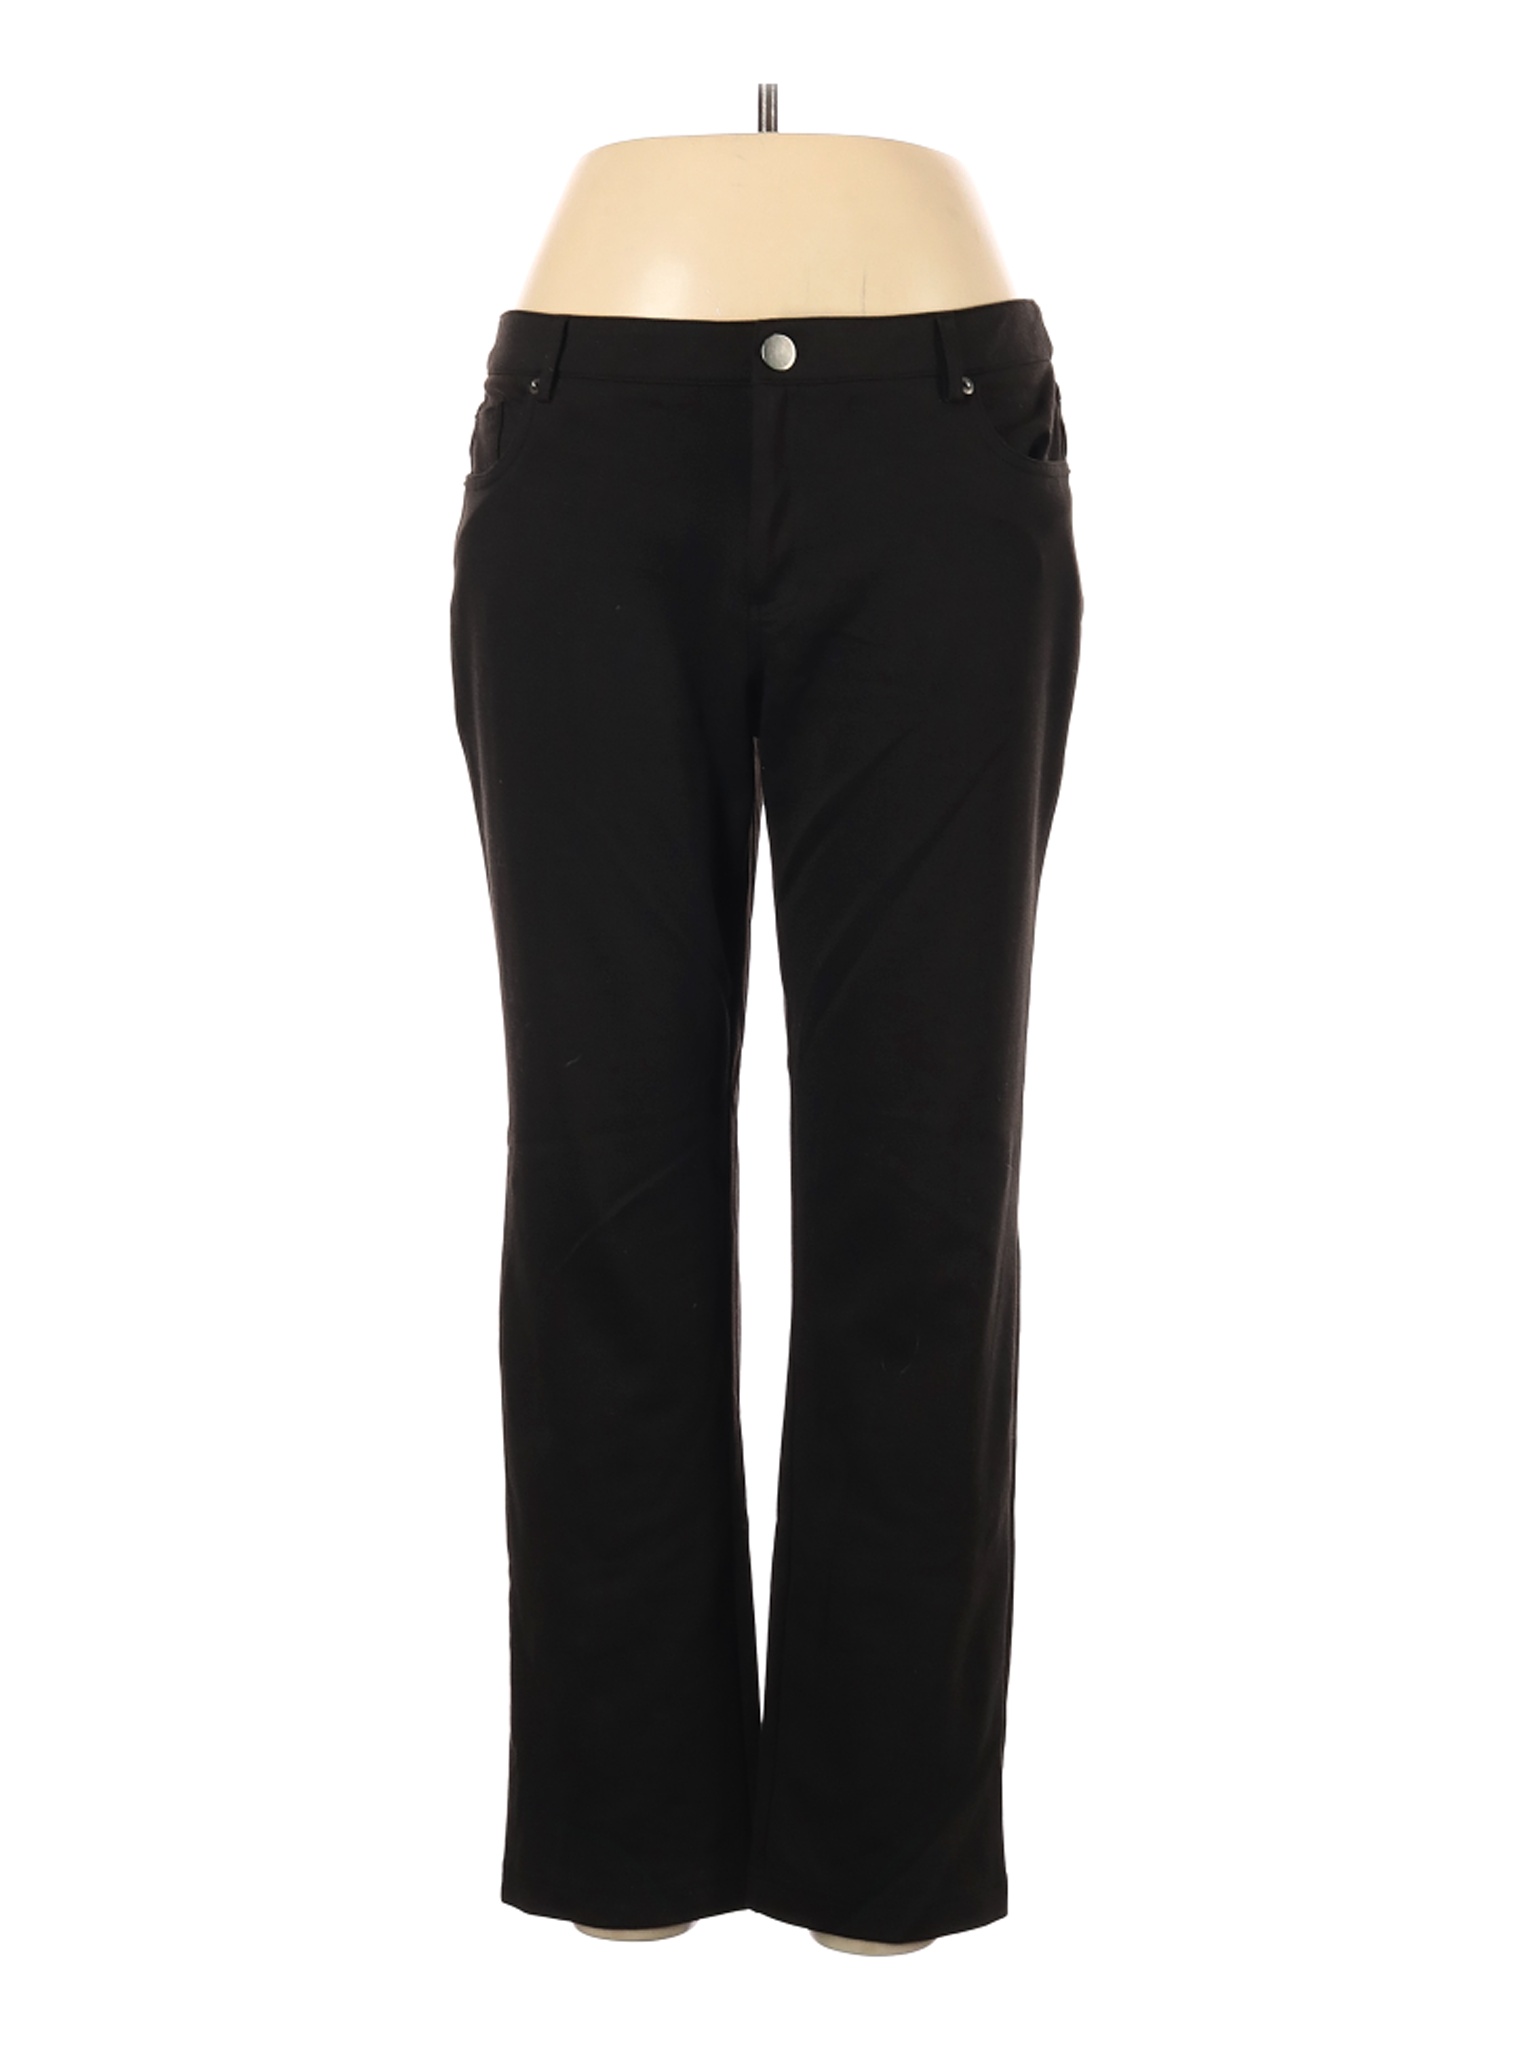 SOHO Apparel Ltd Women Black Casual Pants 12 | eBay